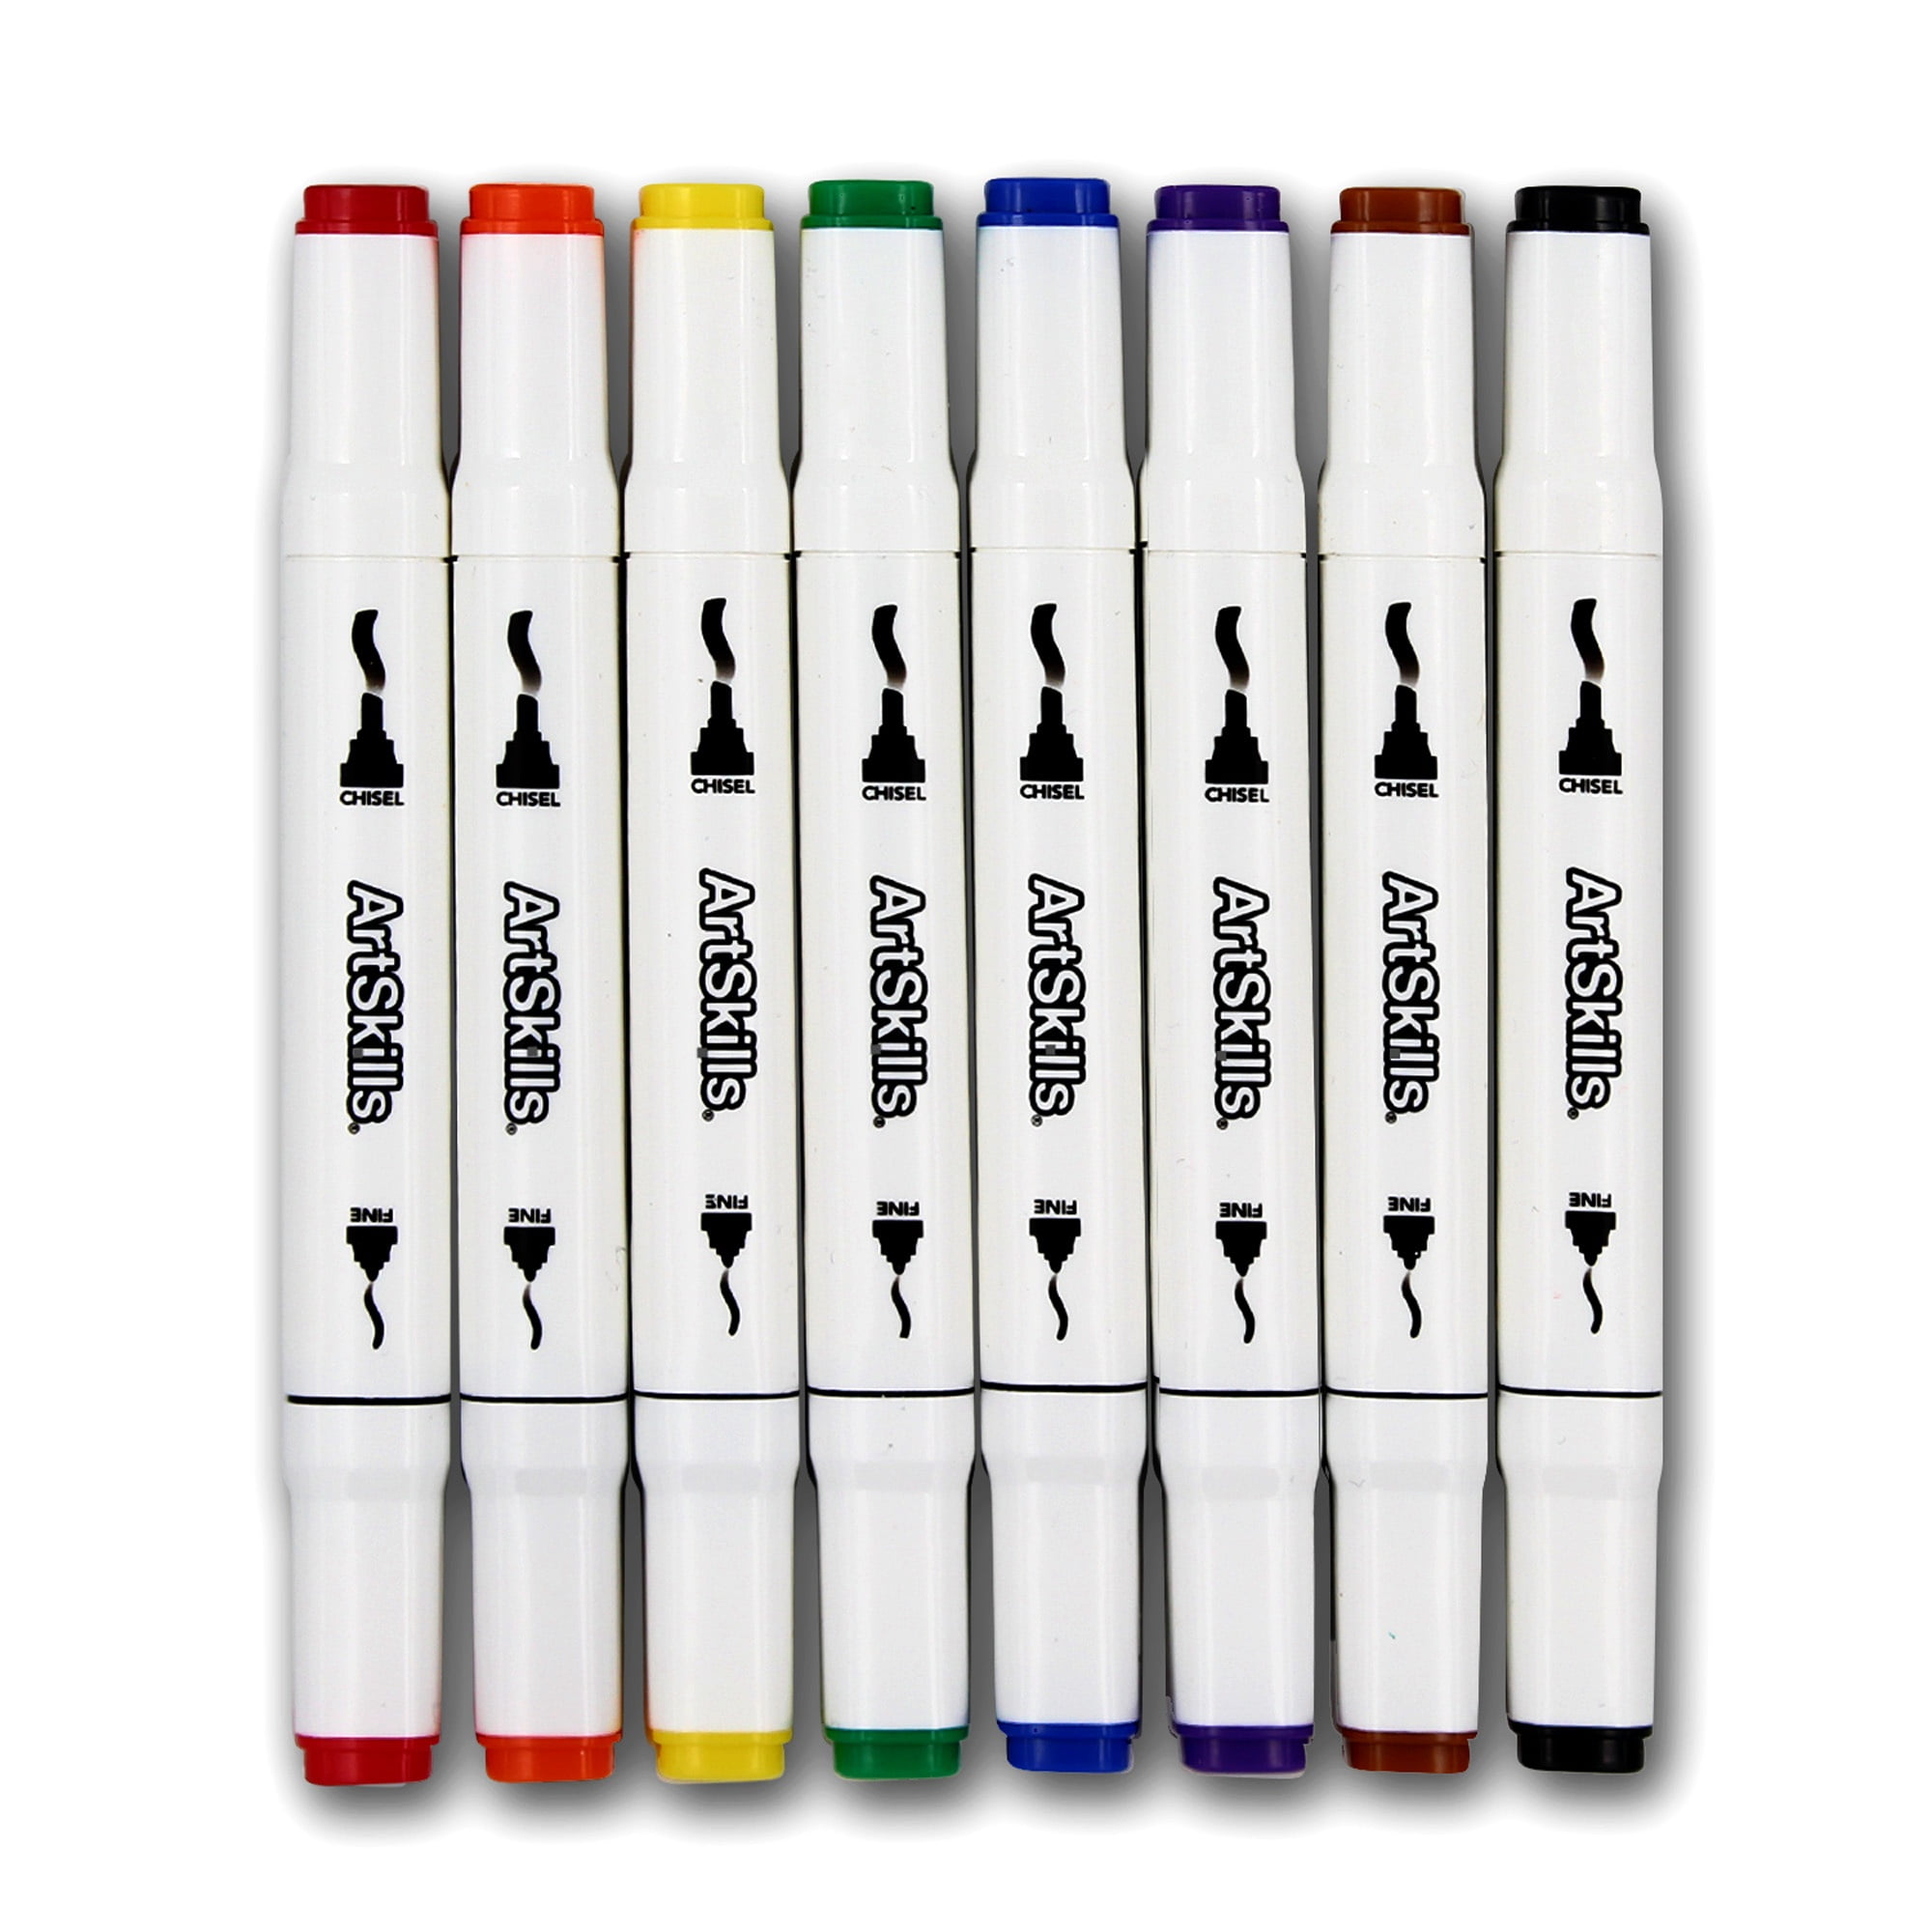 ArtSkills Permanent Paint Markers Art Set, 18 Colors – Openbax